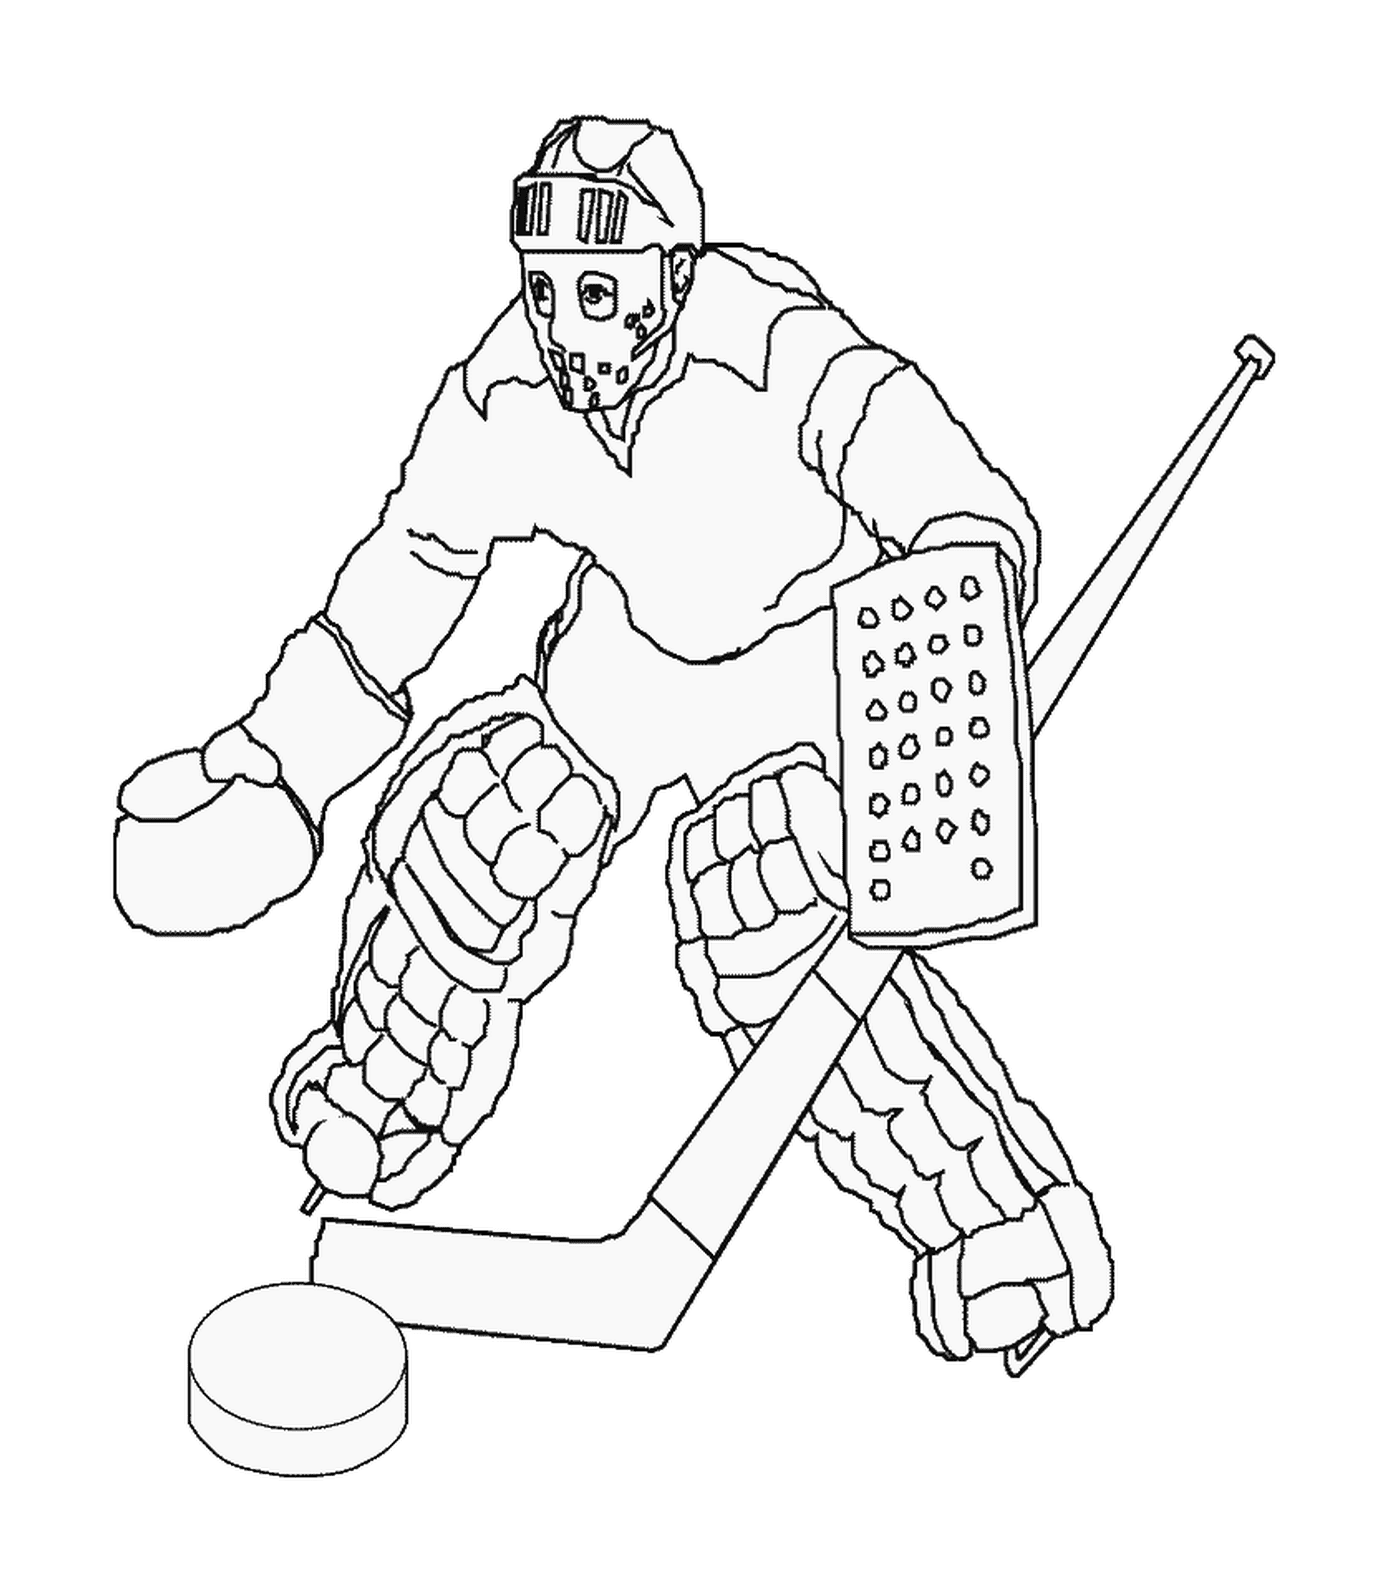   Gardien de but de hockey sur glace 